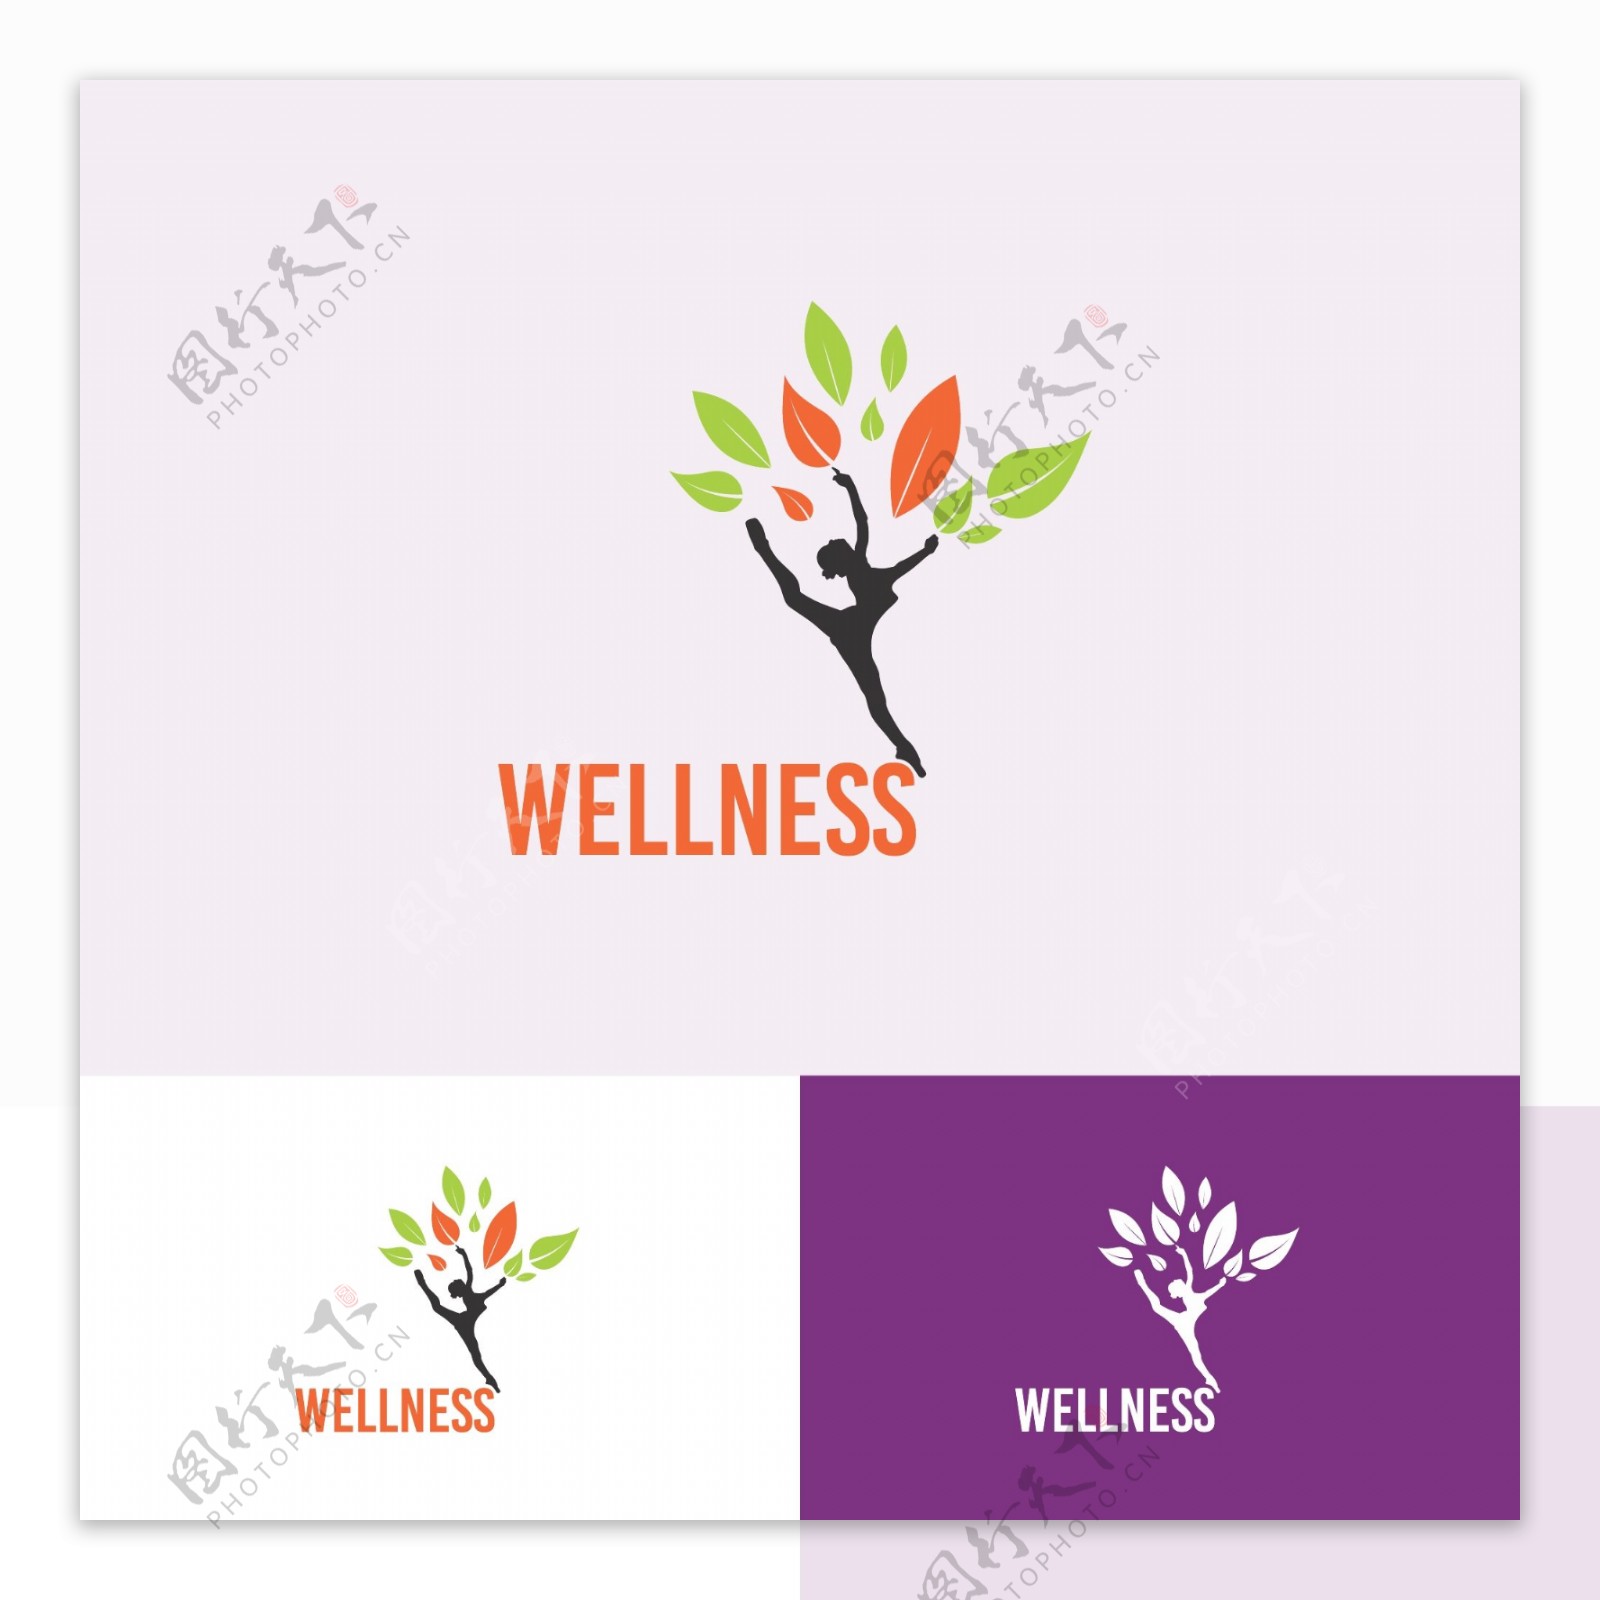 健康logo模板